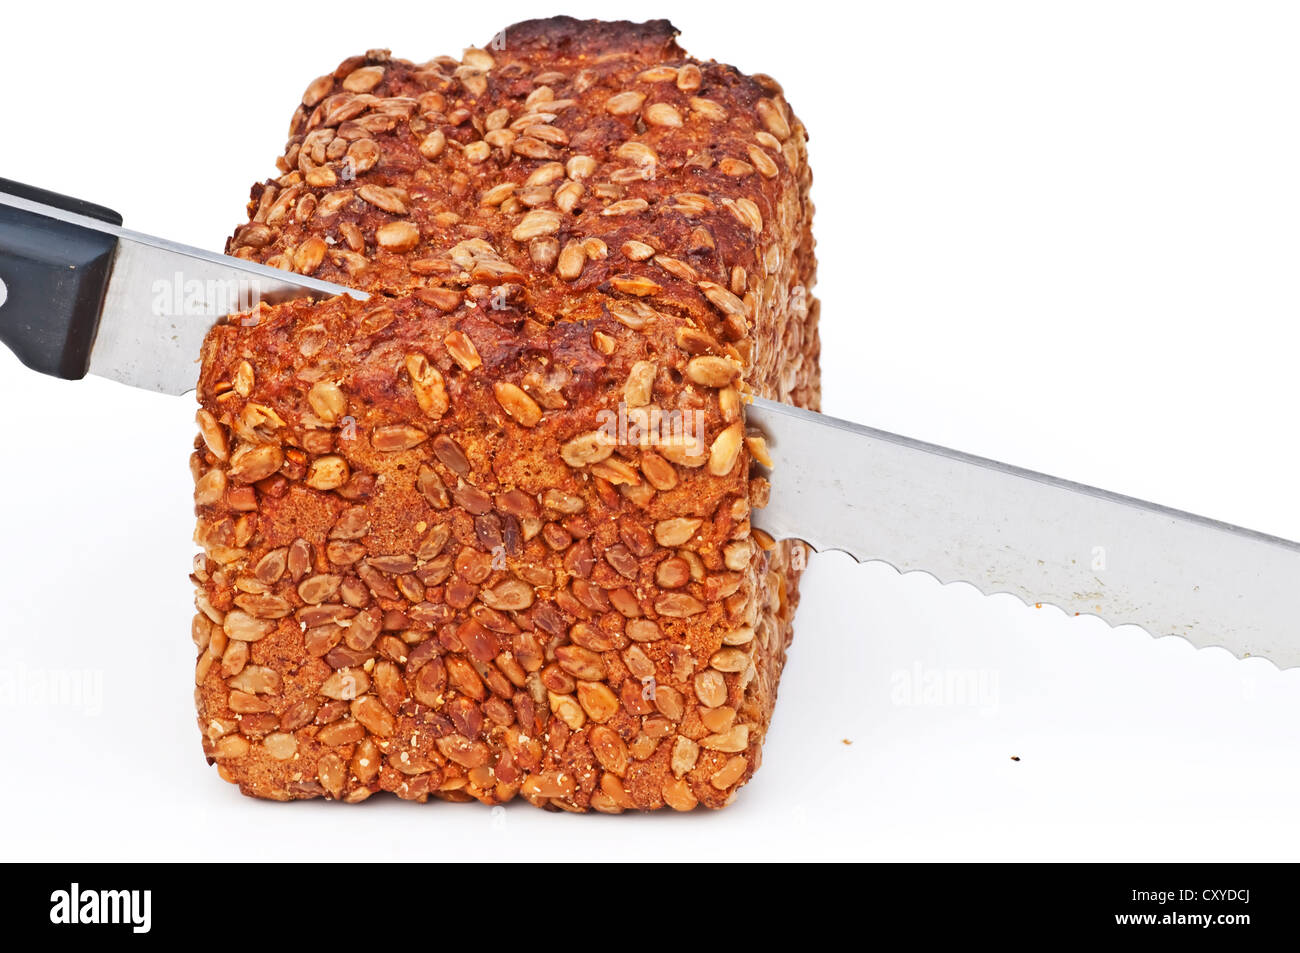 whole grain bread of Germany Stock Photo